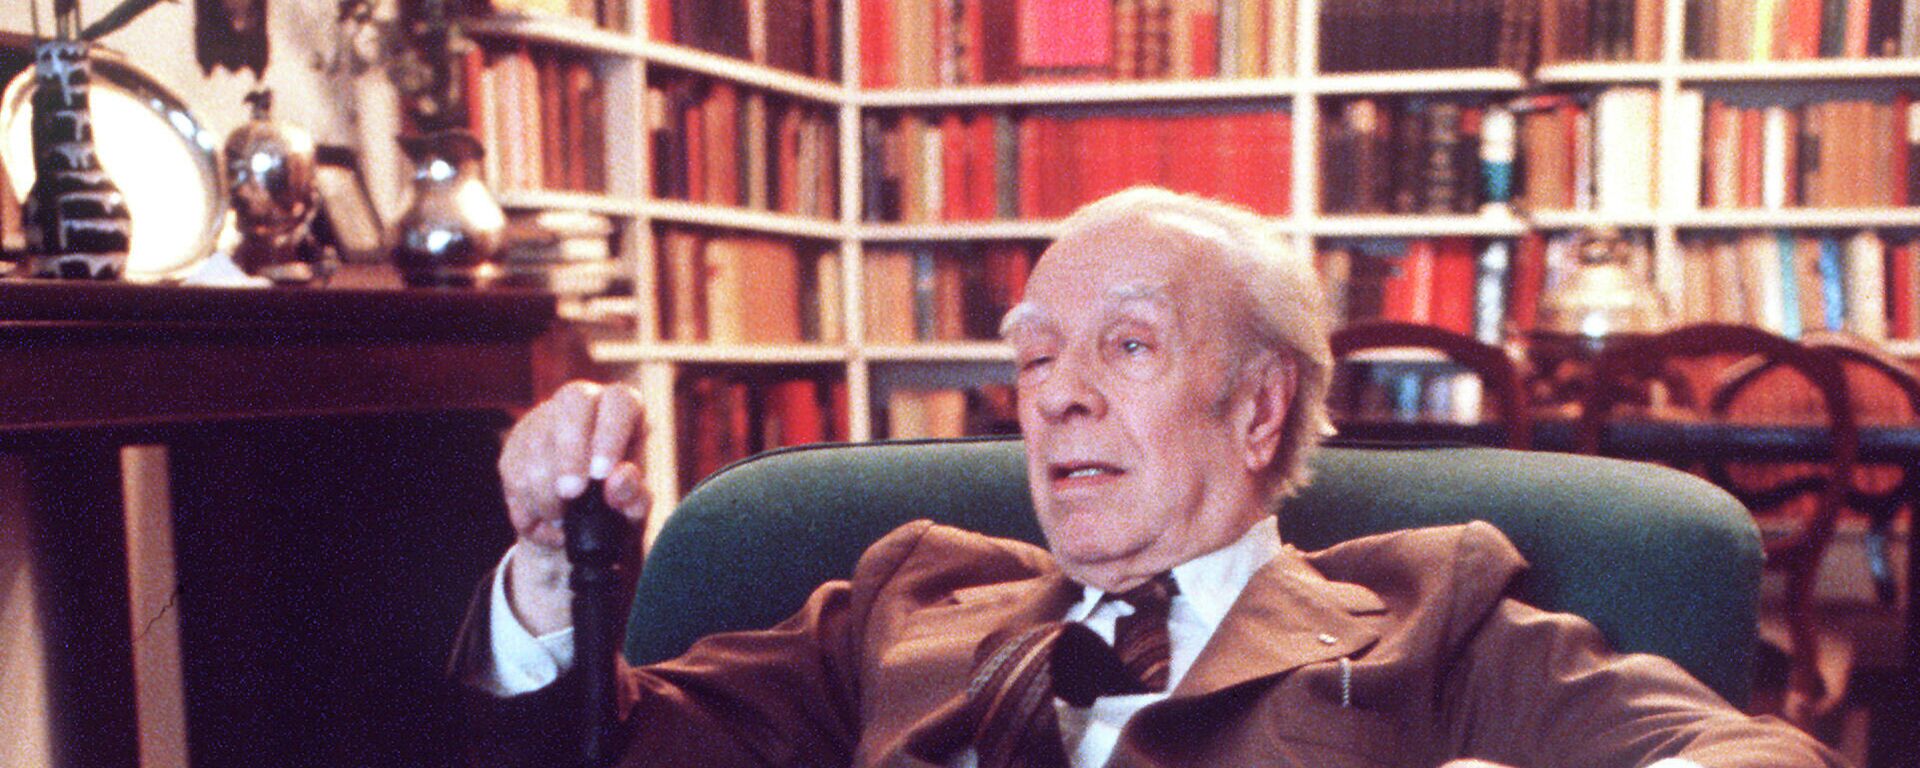 El escritor argentino Jorge Luis Borges (1899-1986) - Sputnik Mundo, 1920, 01.10.2021